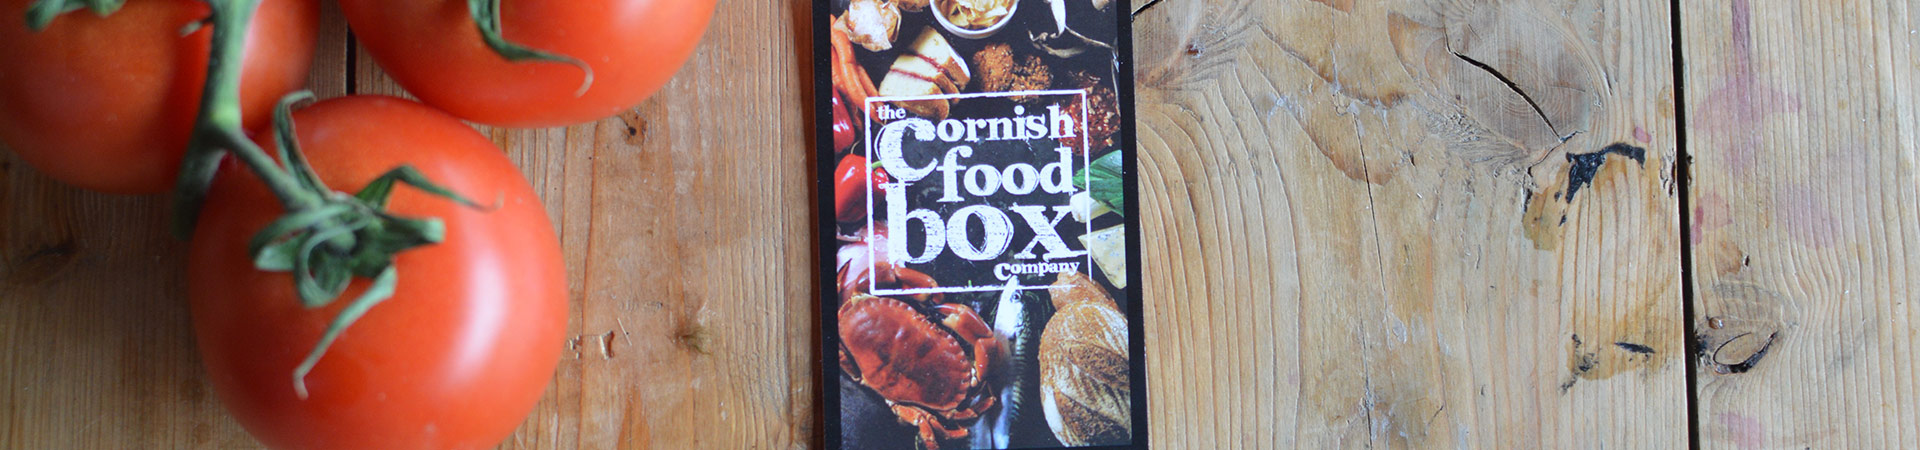 Classic and Cornish Food Box